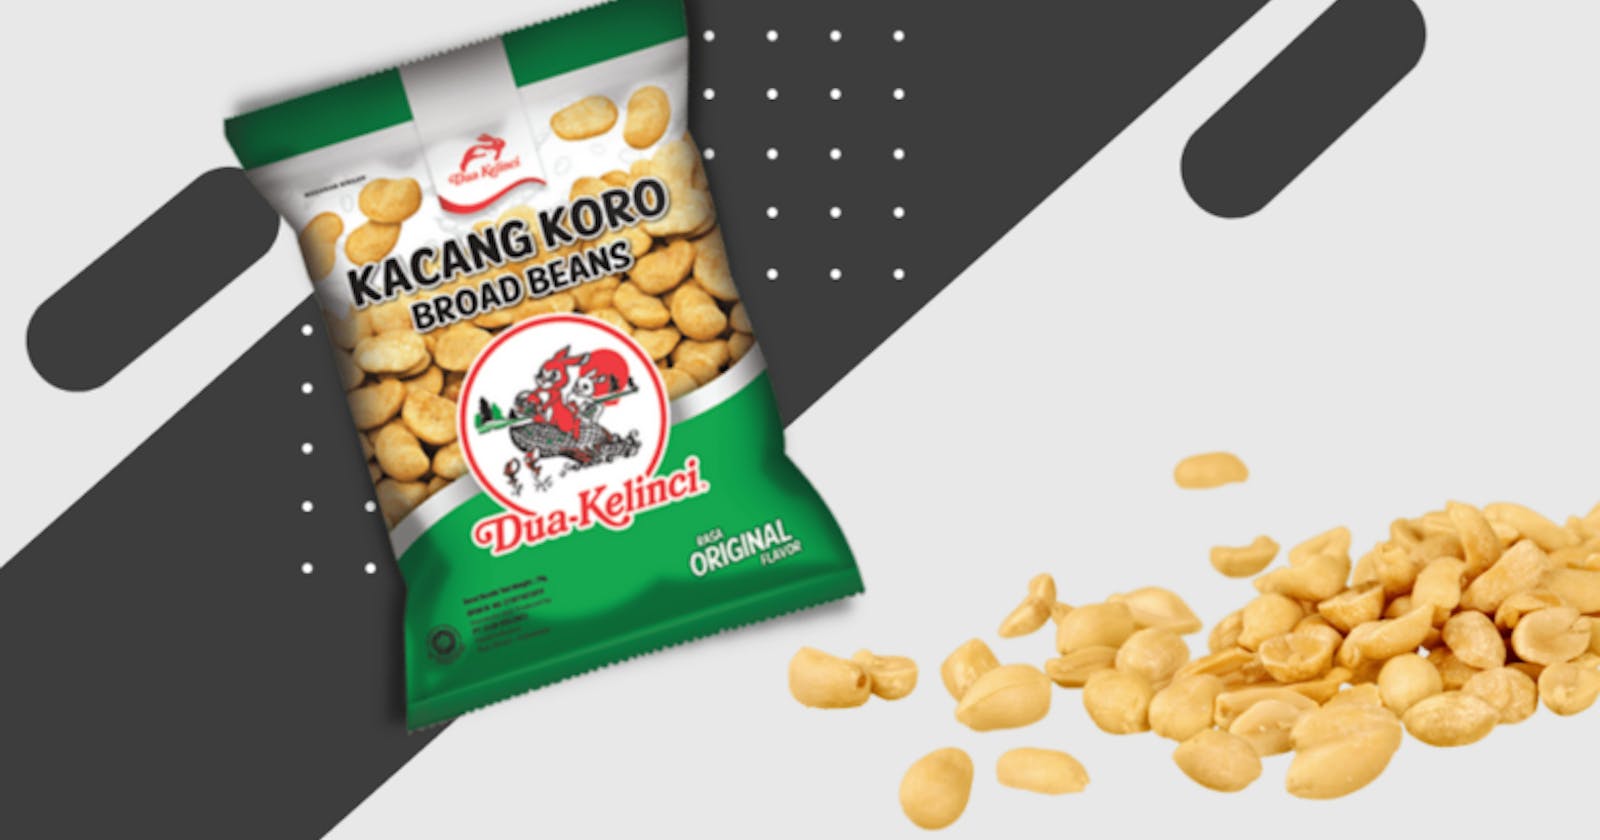 Dua Kelinci Lofet Peanuts Review: The Perfect Snack for Peanut Lovers